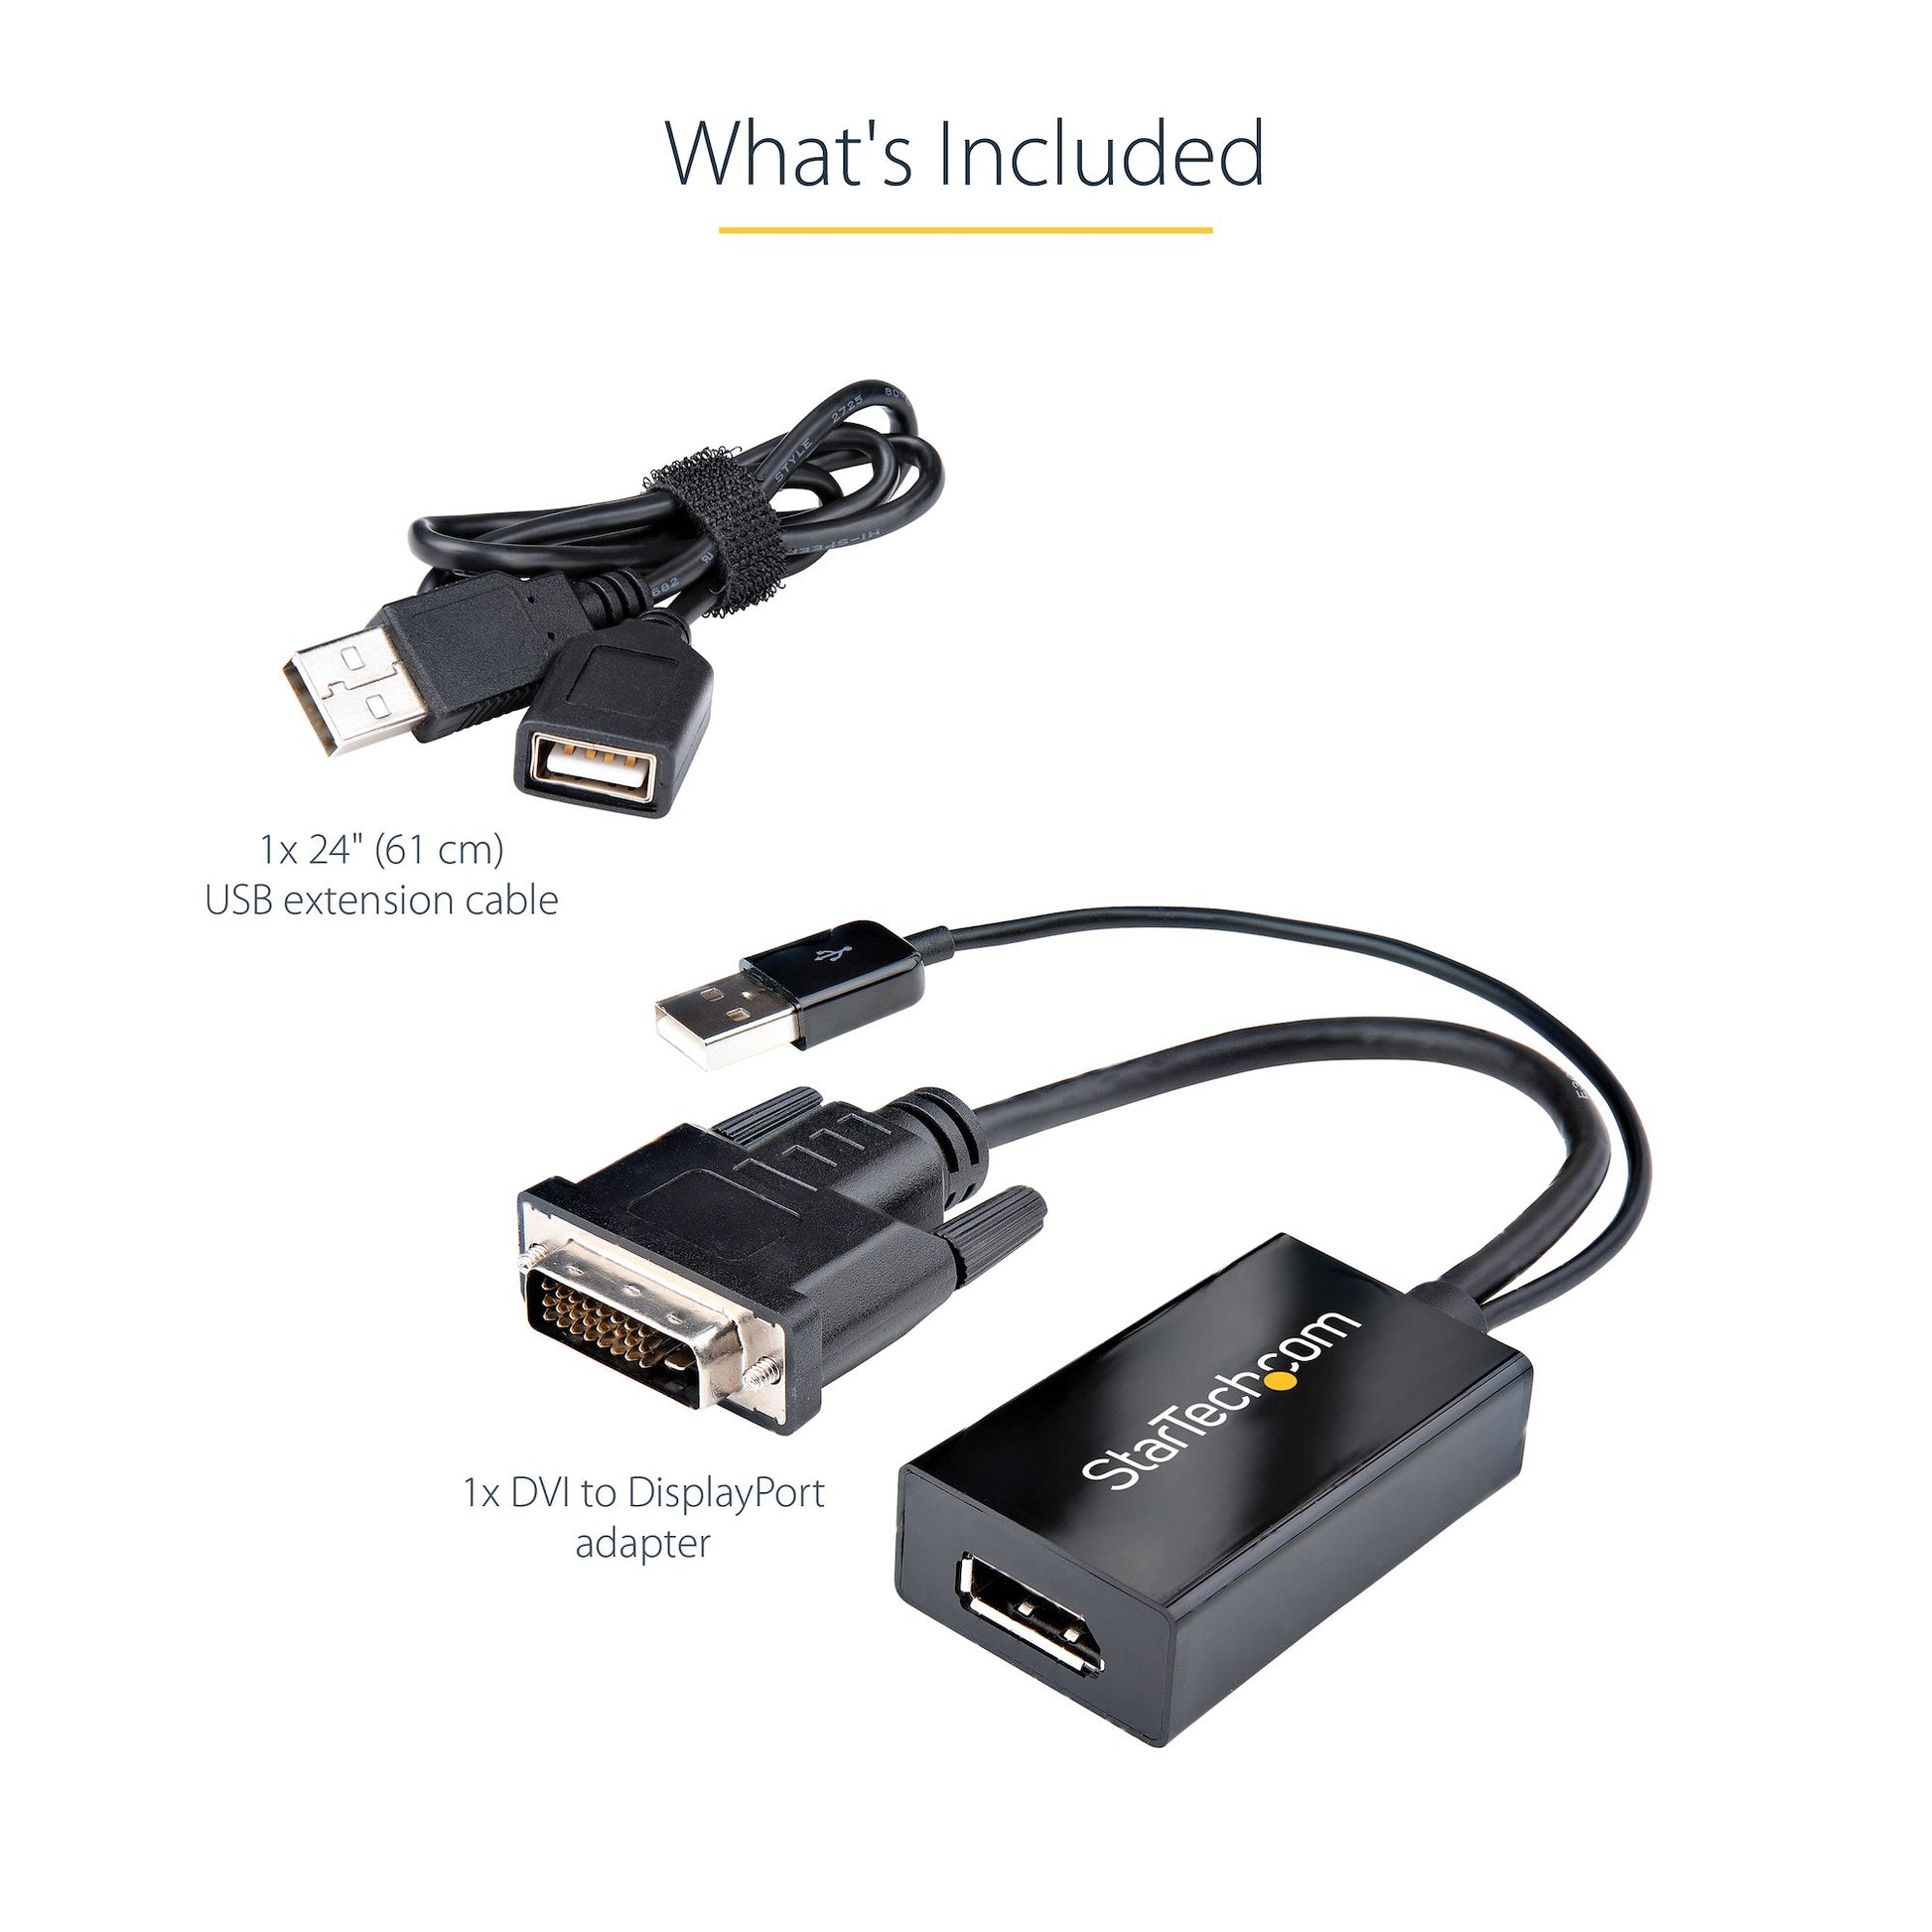 StarTech.com DVI to DisplayPort Adapter - USB Power - 1920 x 1200 - DVI to DisplayPort Converter - Video Adapter - DVI-D to DP-13